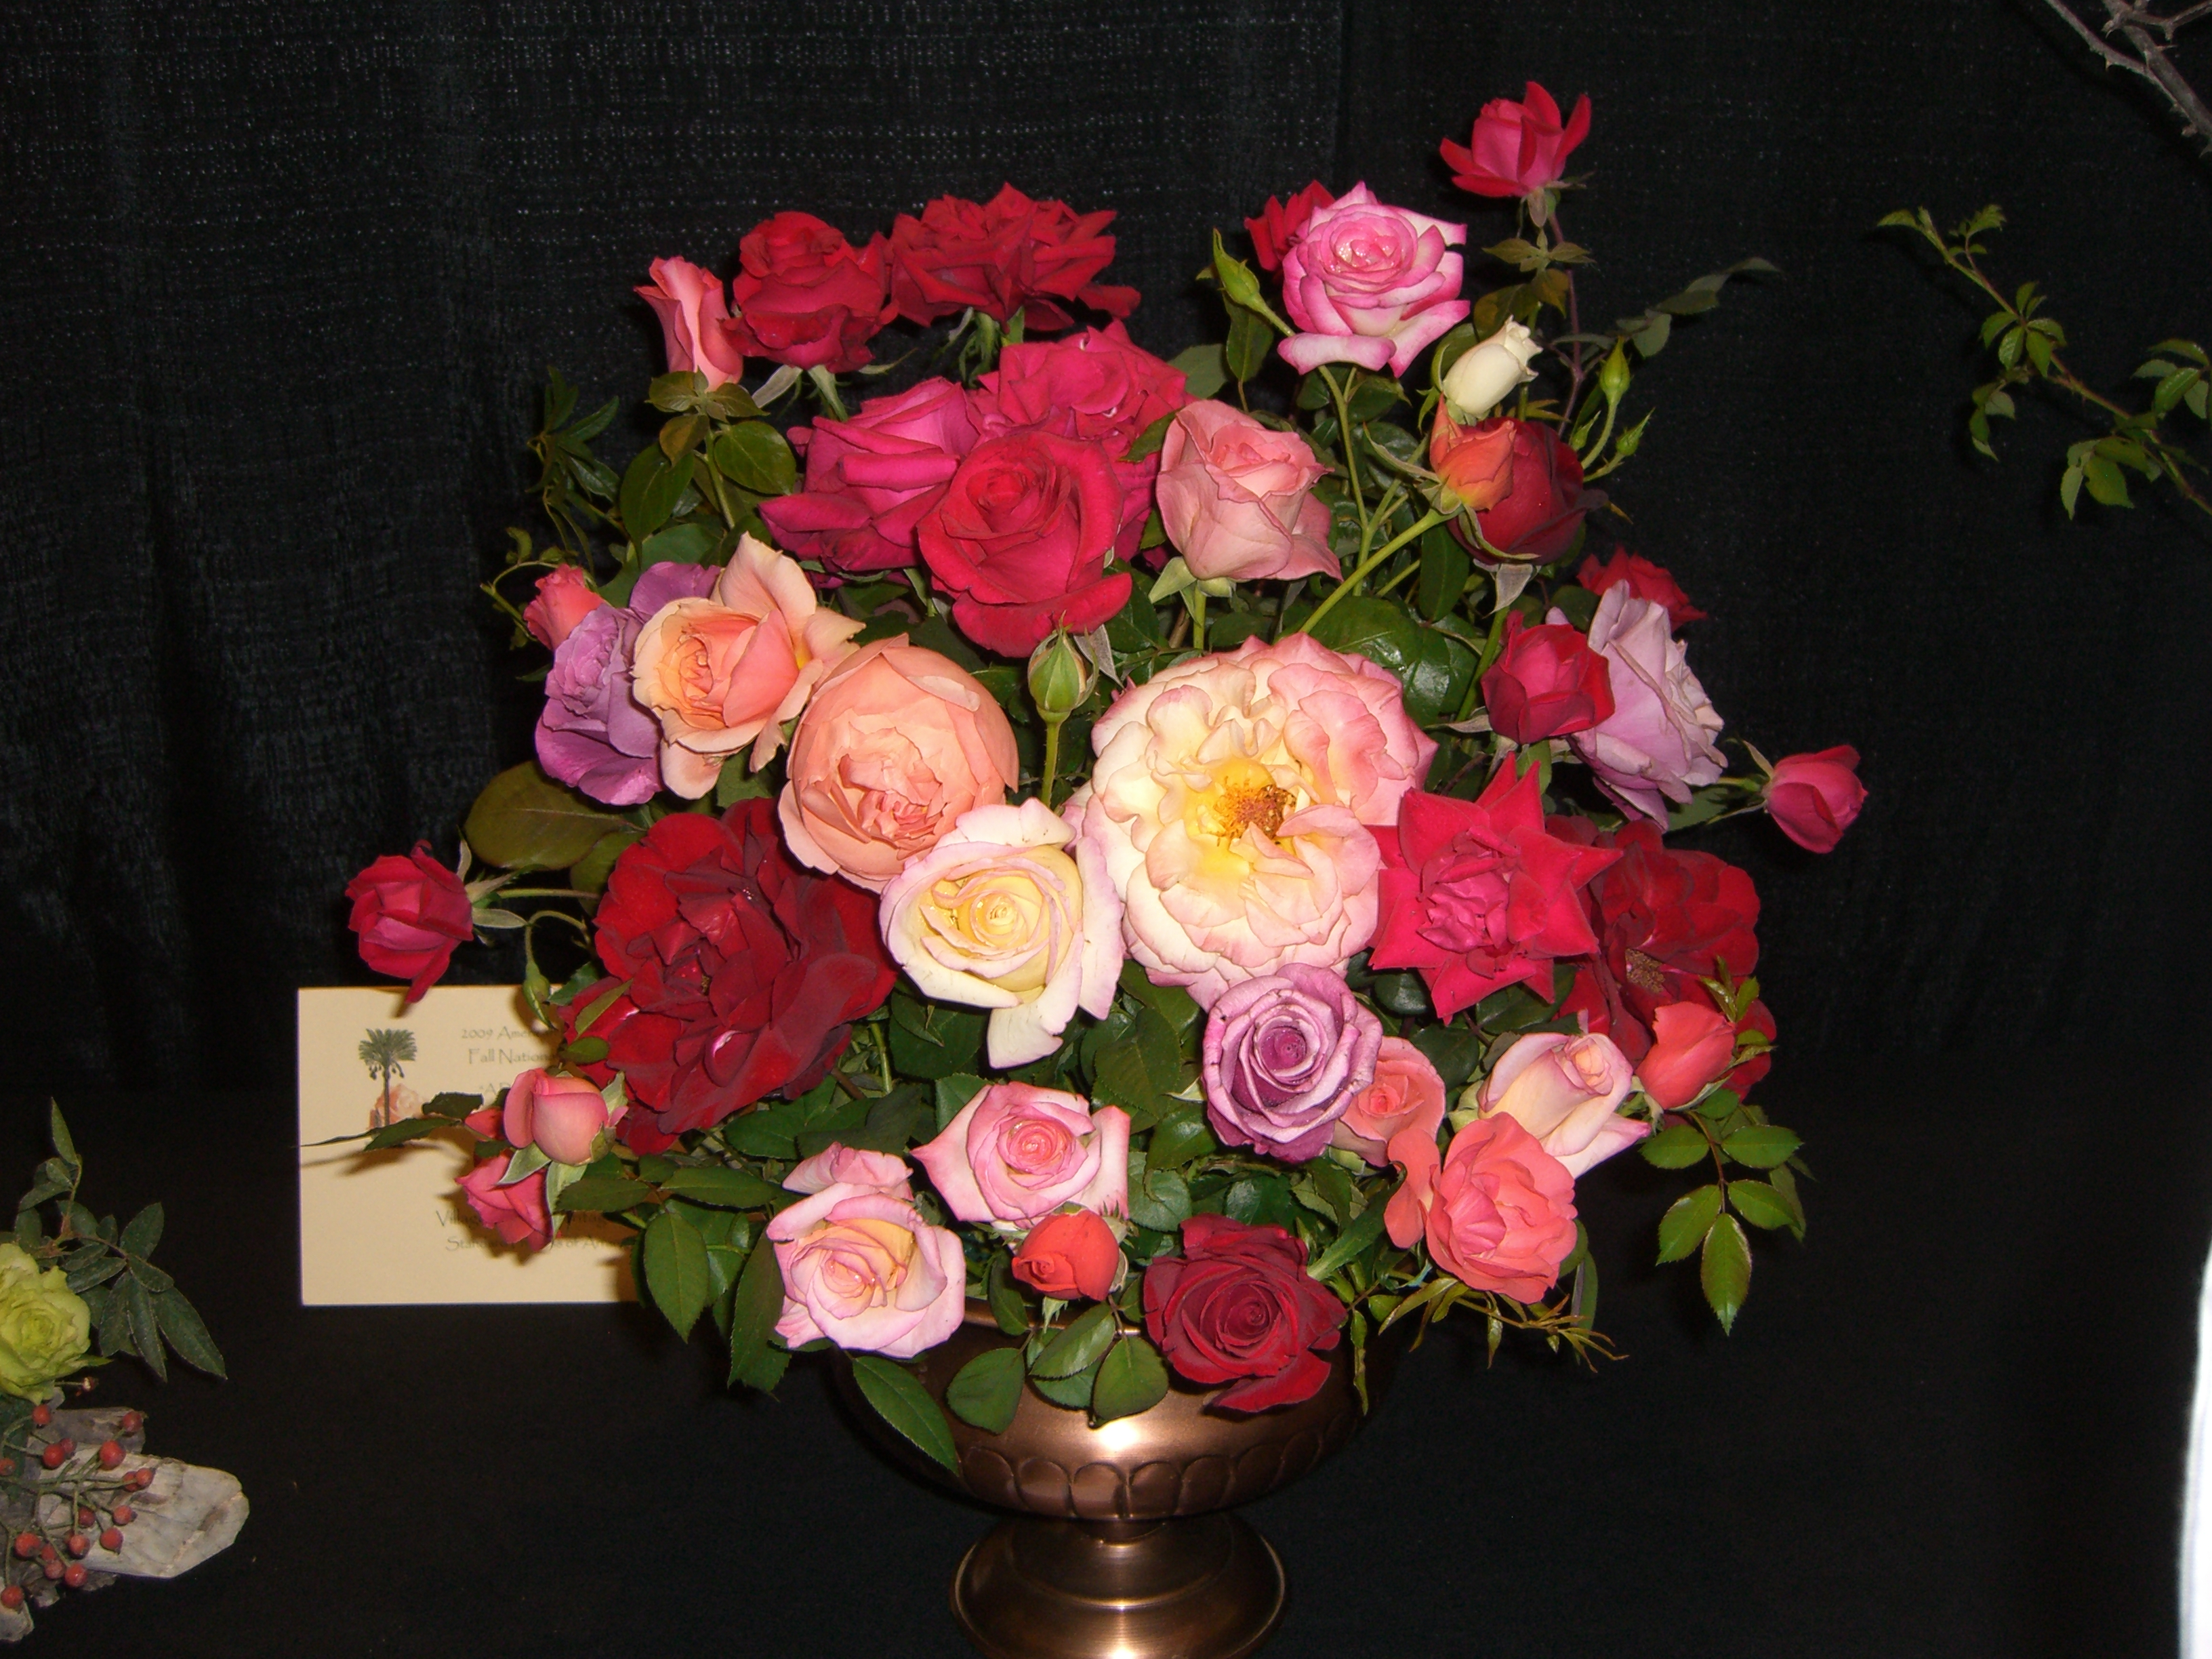 Букеты роз в вазе на столе. Букет цветов. Букет цветов в вазе. Букет роз в вазе. Букет цветов на столе.